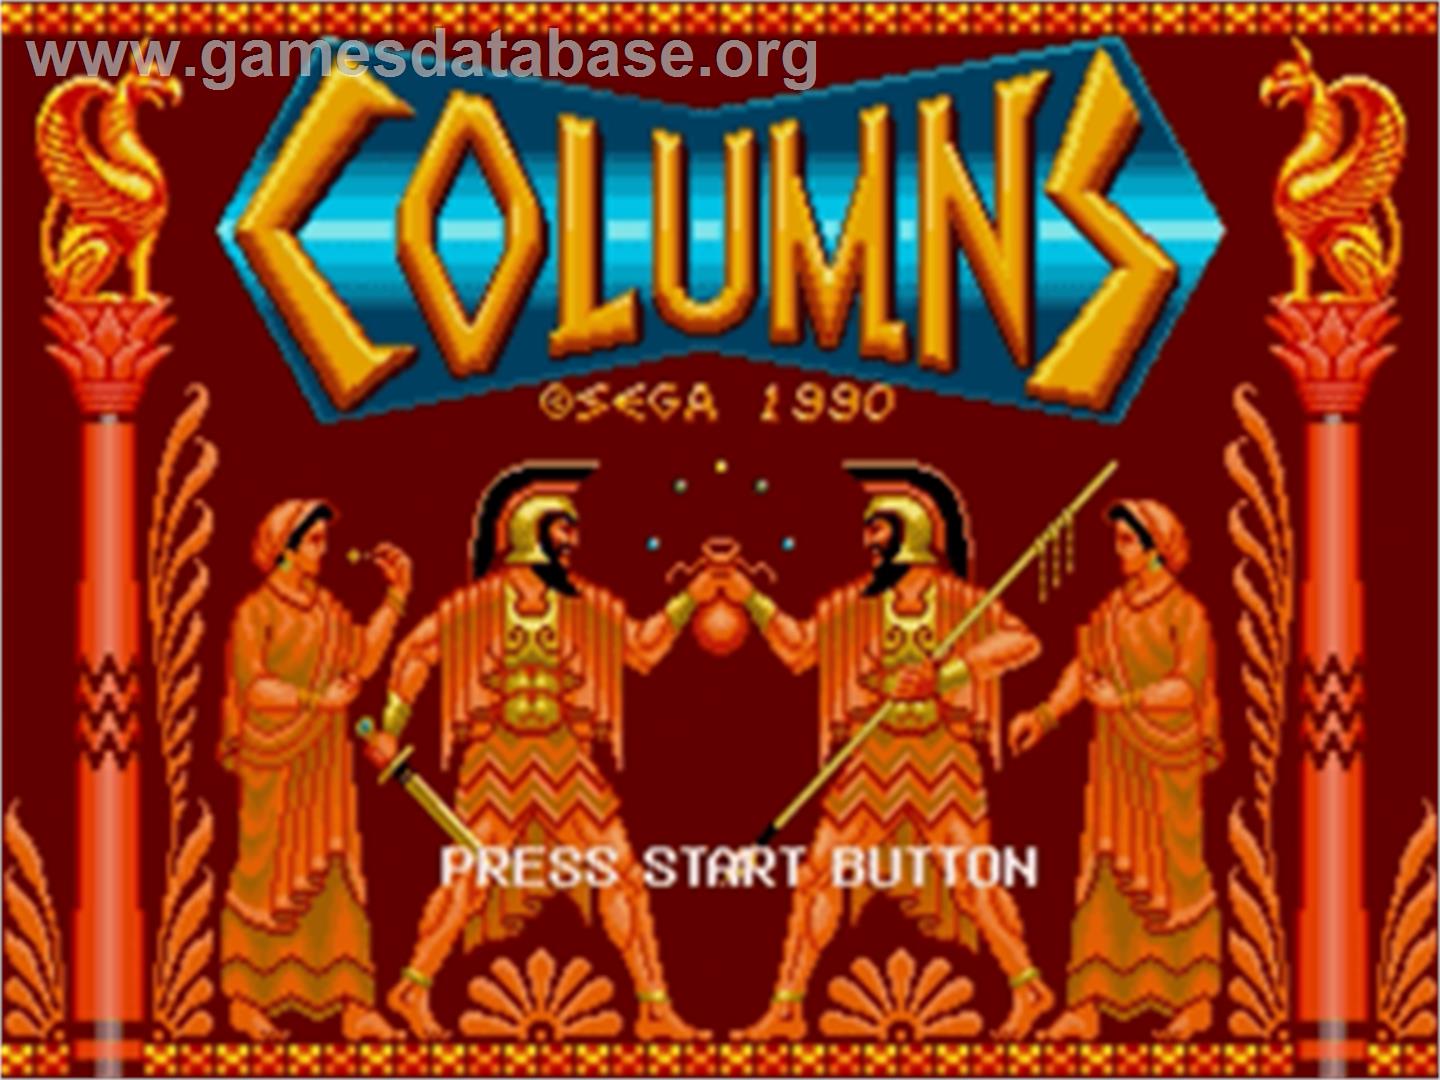 Columns - Sega Nomad - Artwork - Title Screen